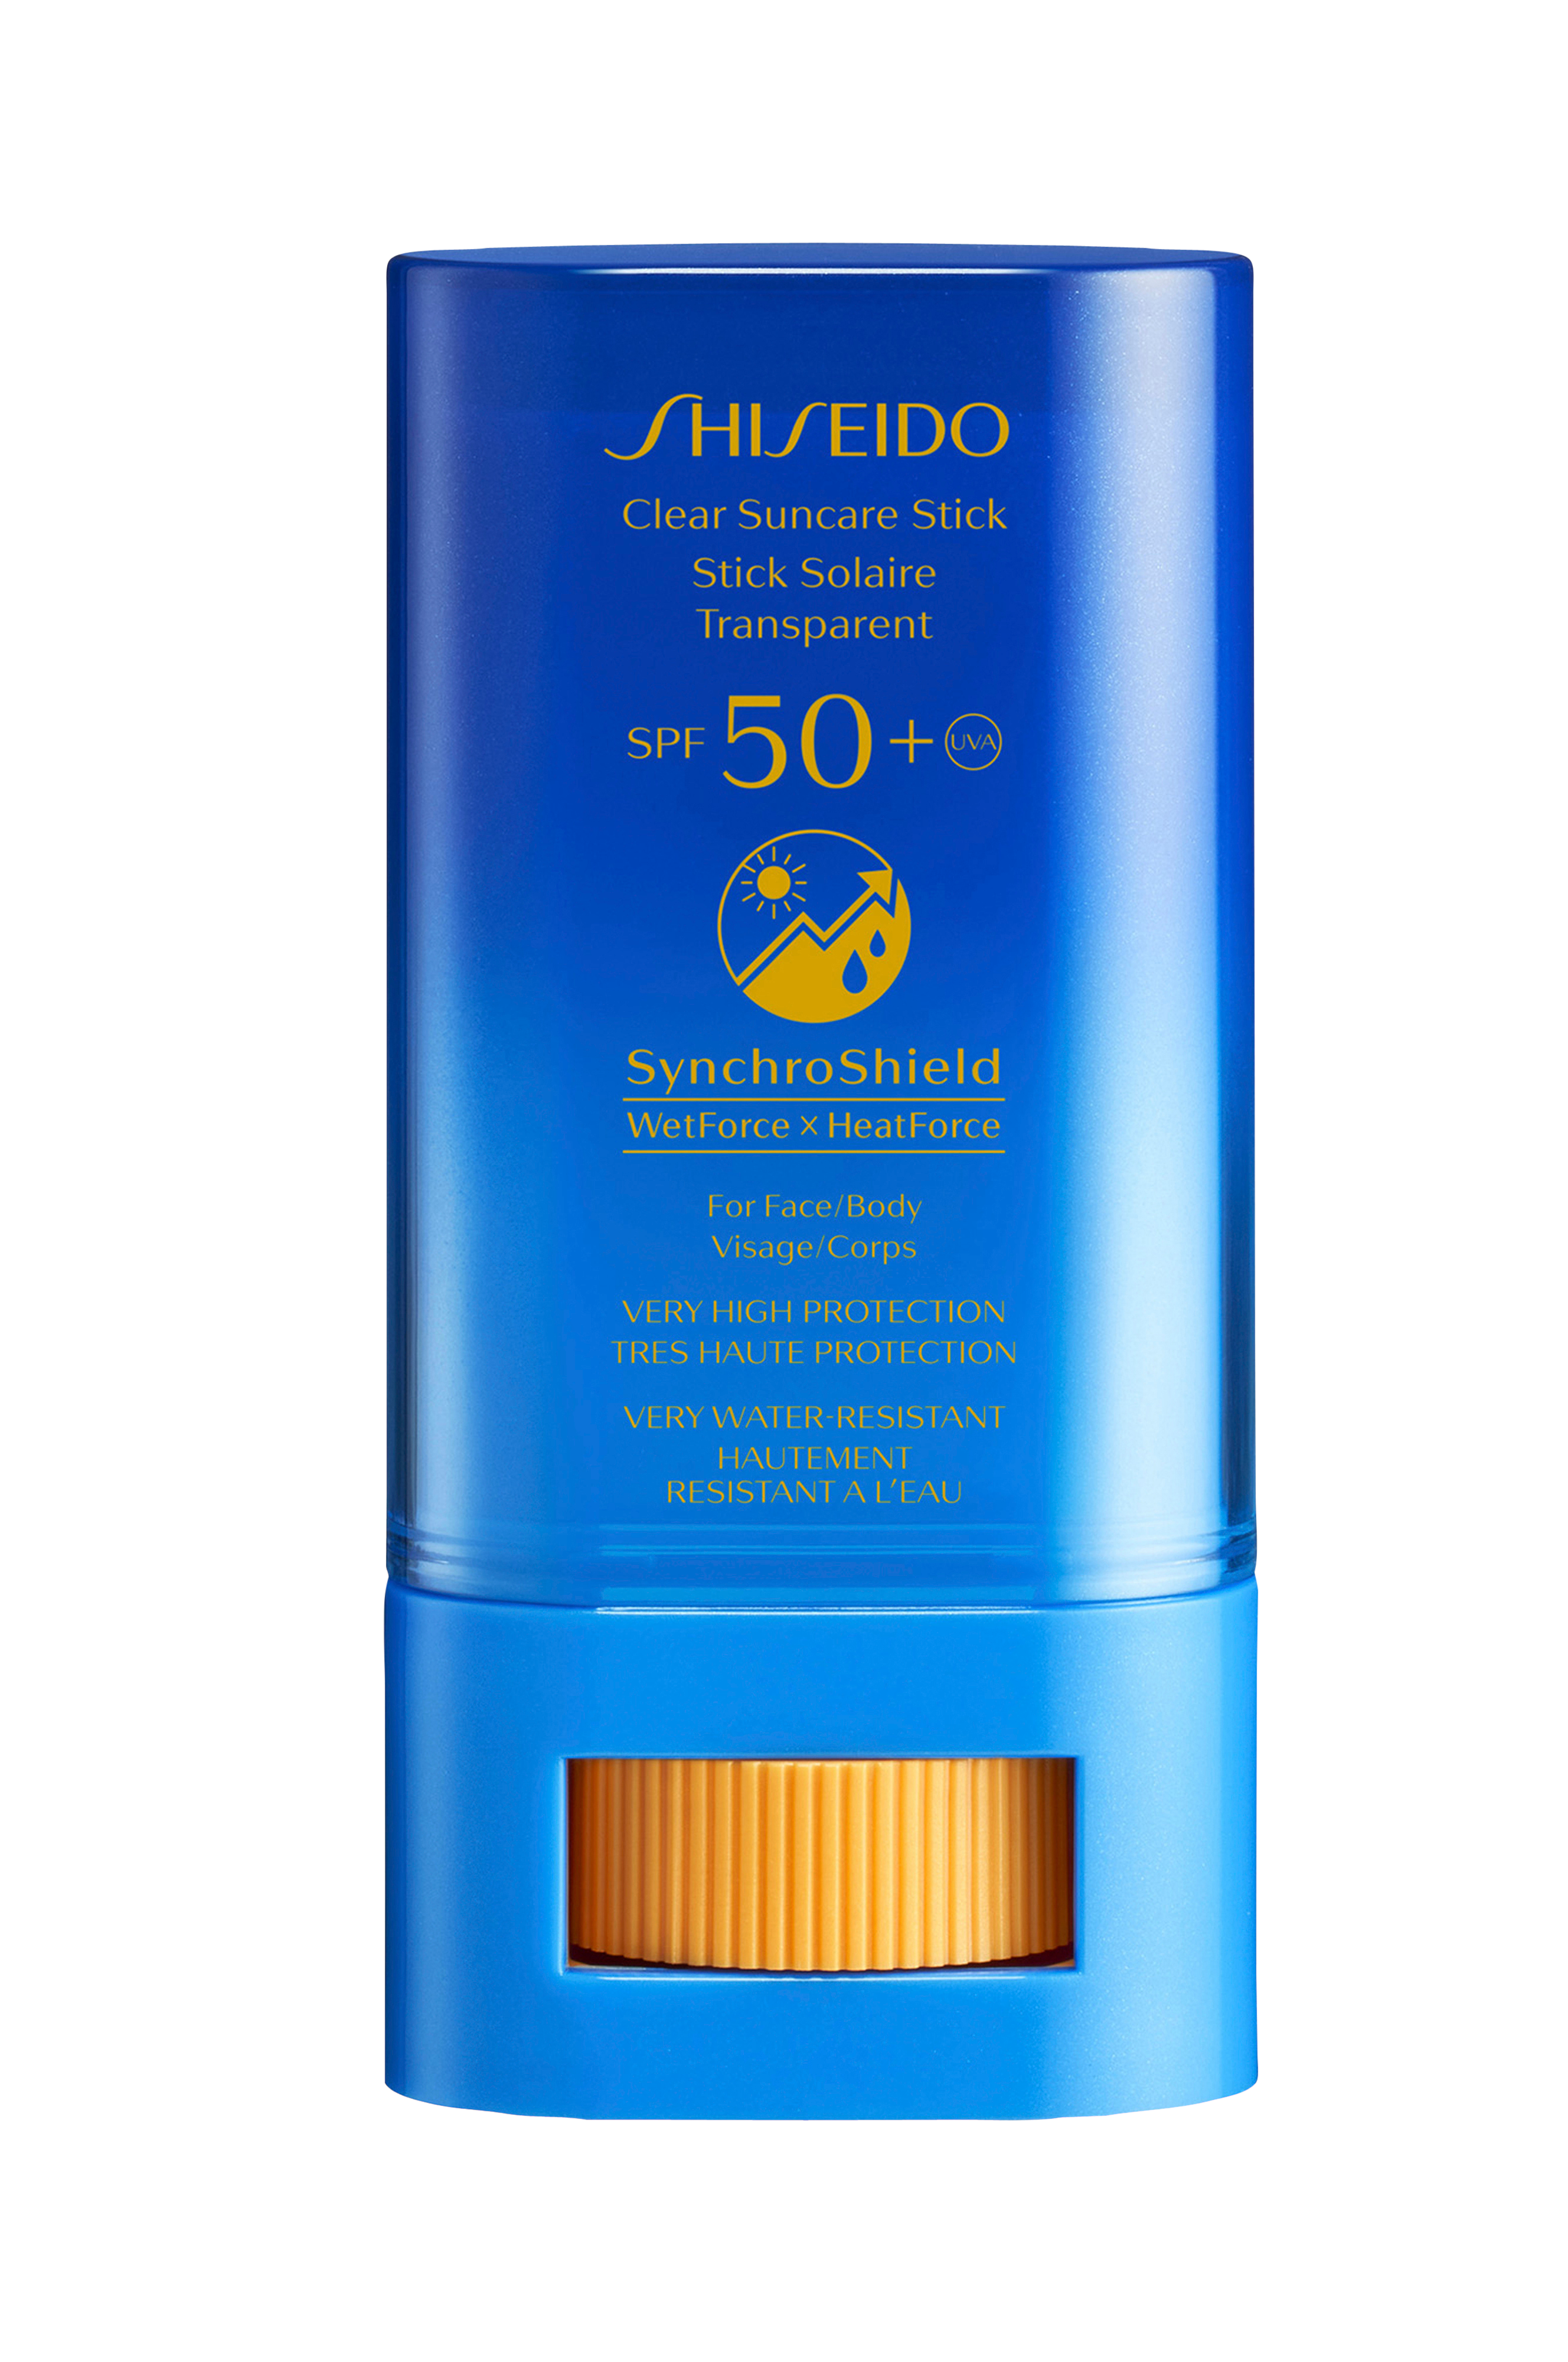 Стик от солнца. Shiseido Stick spf50+ Clear. Шисейдо стик СПФ 50. Стик солнцезащитный SPF 50+. Shiseido Sunscreen.